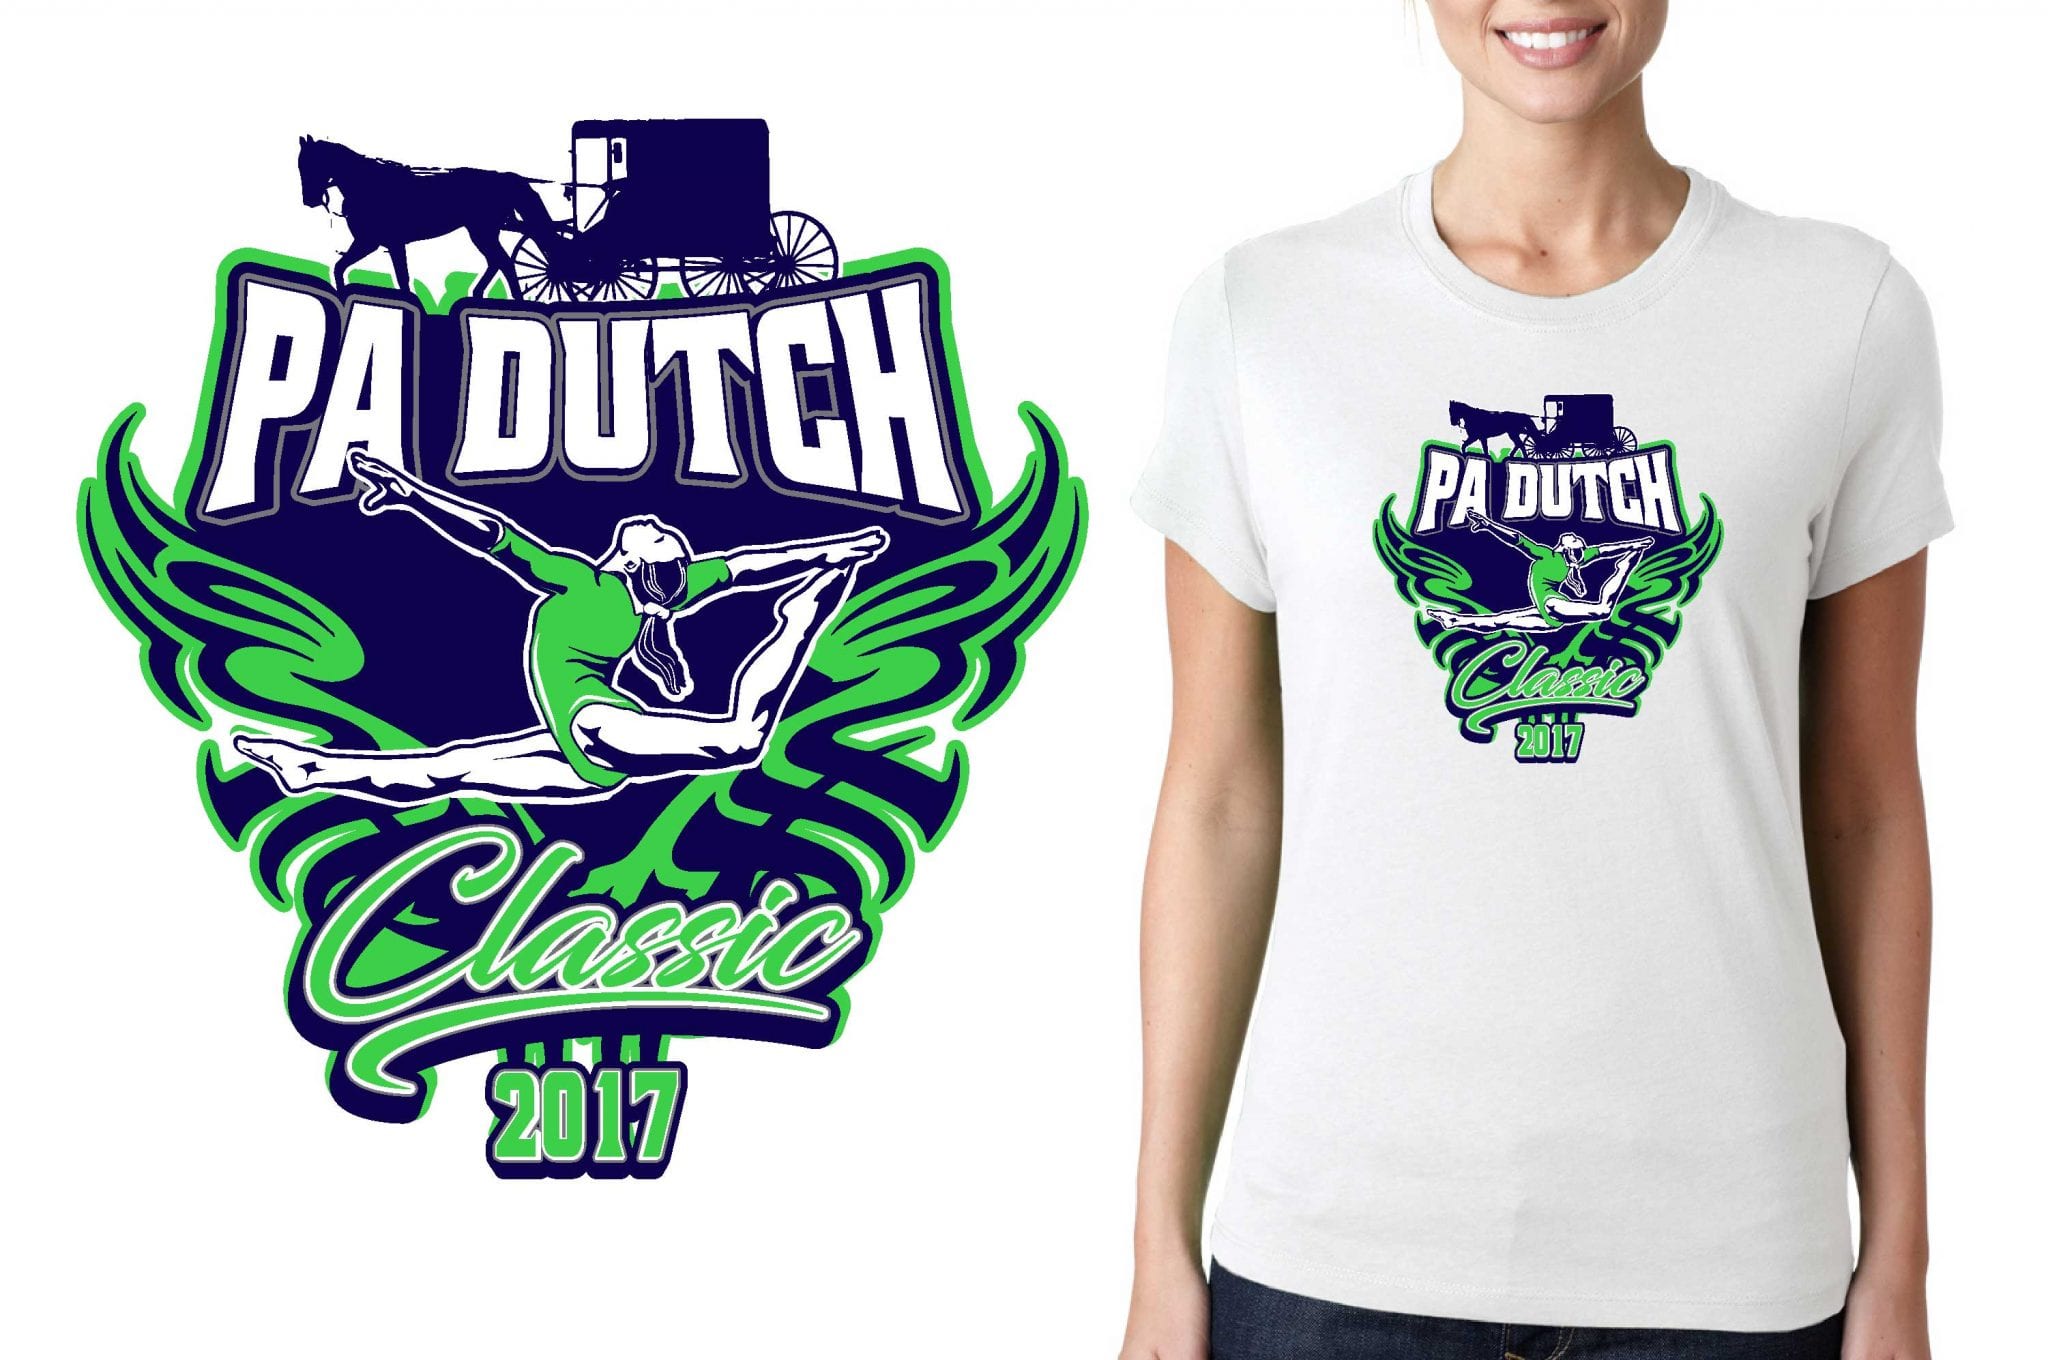 2017 PA Dutch Classic vector logo design for gymnastics t-shirt UrArtStudio